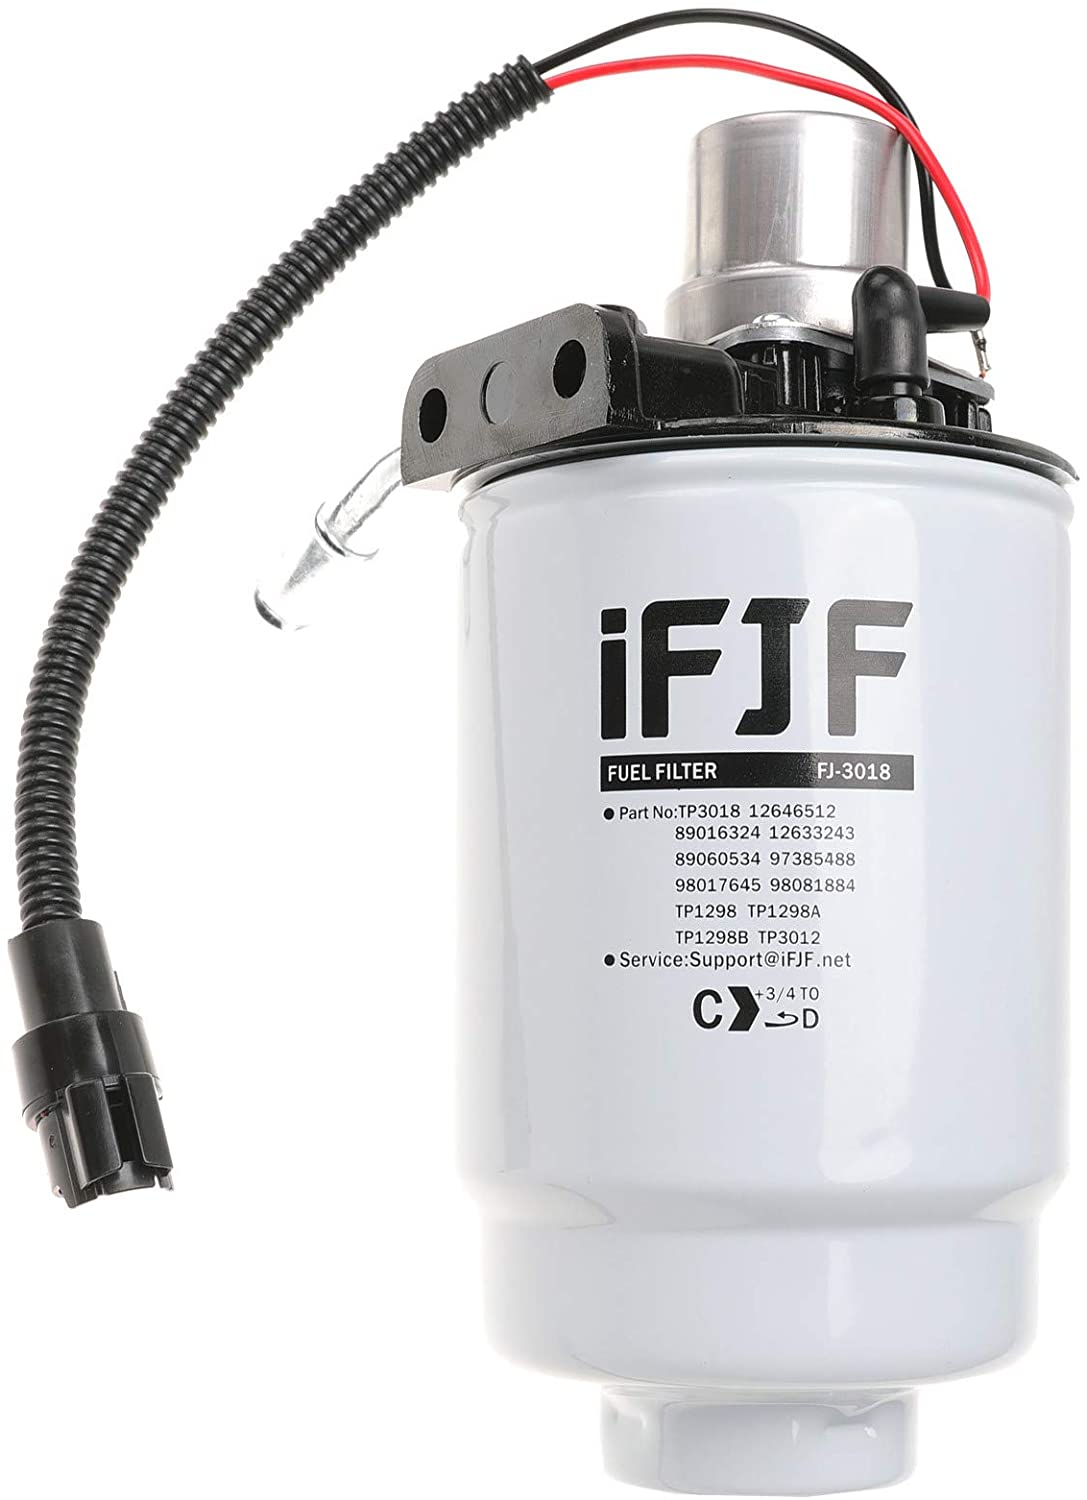 iFJF 12639277 Water in Fuel Indicator Sensor for Duramax 6.6L Chevrolet Silverado and GMC Sierra Engine 2001-2011 Truck Aftermarket 8 Side Design